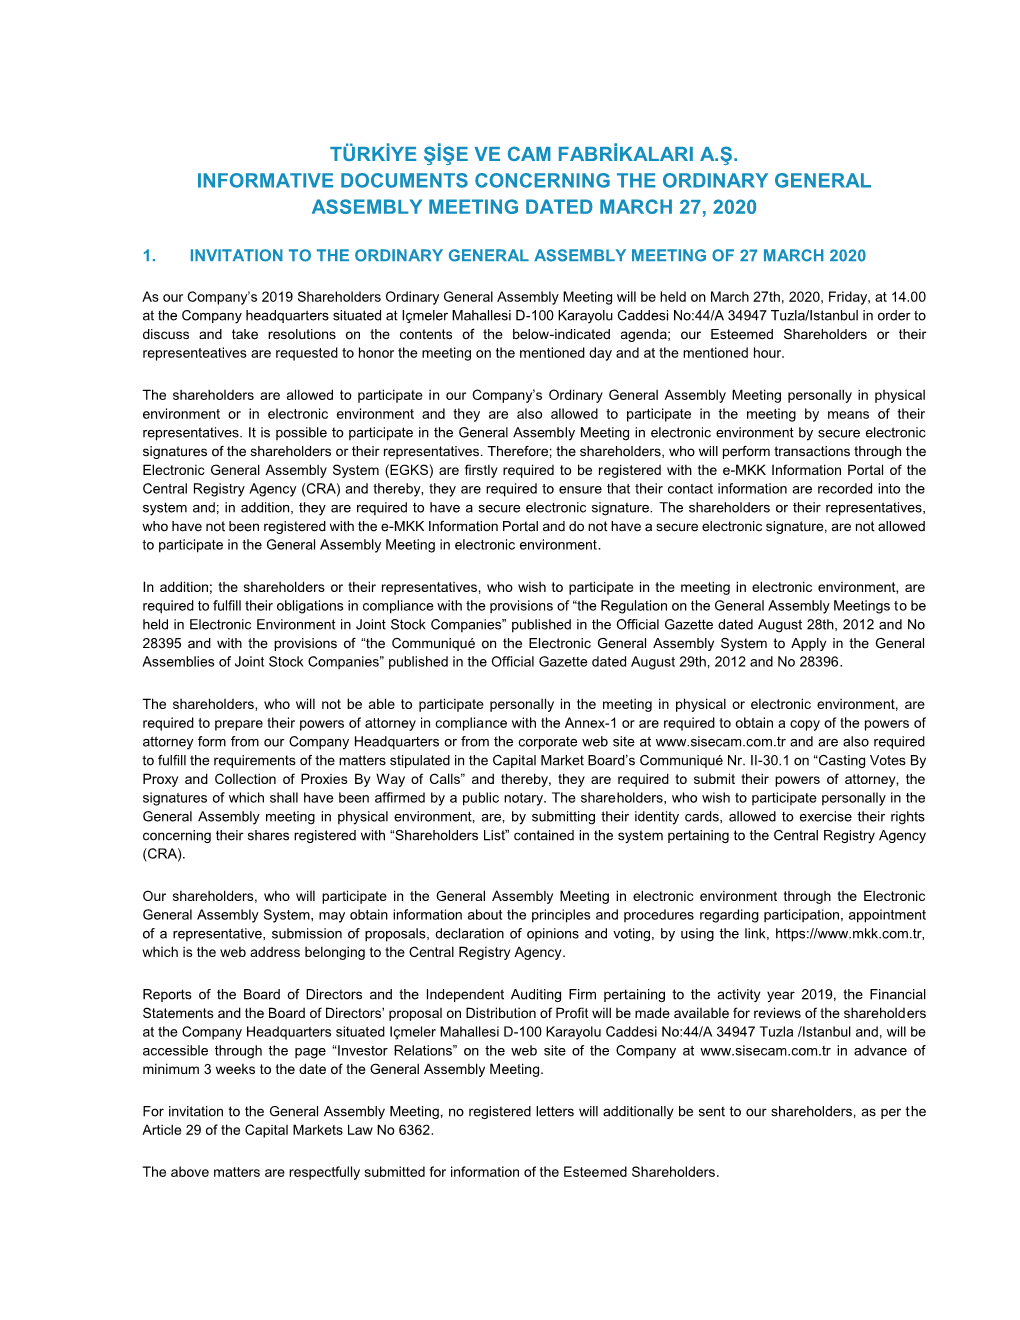 Türkiye Şişe Ve Cam Fabrikalari A.Ş. Informative Documents Concerning the Ordinary General Assembly Meeting Dated March 27, 2020